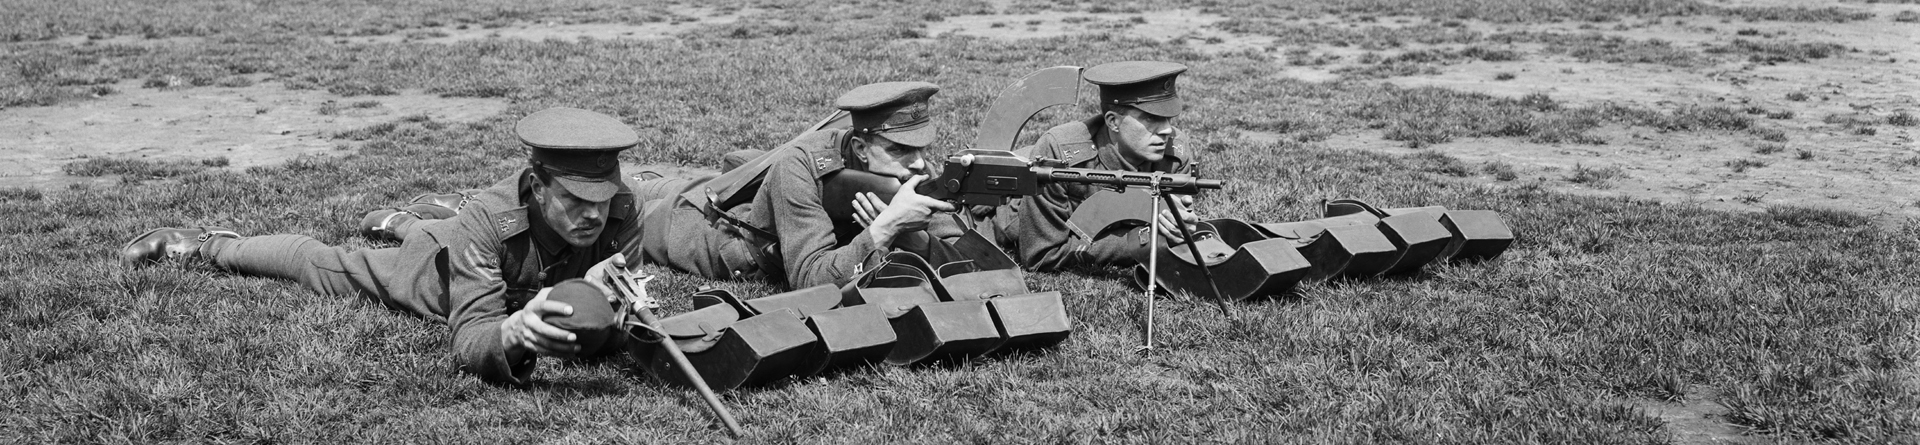 Archive photograph of first world war soldiers trialling a machine gun 1918.